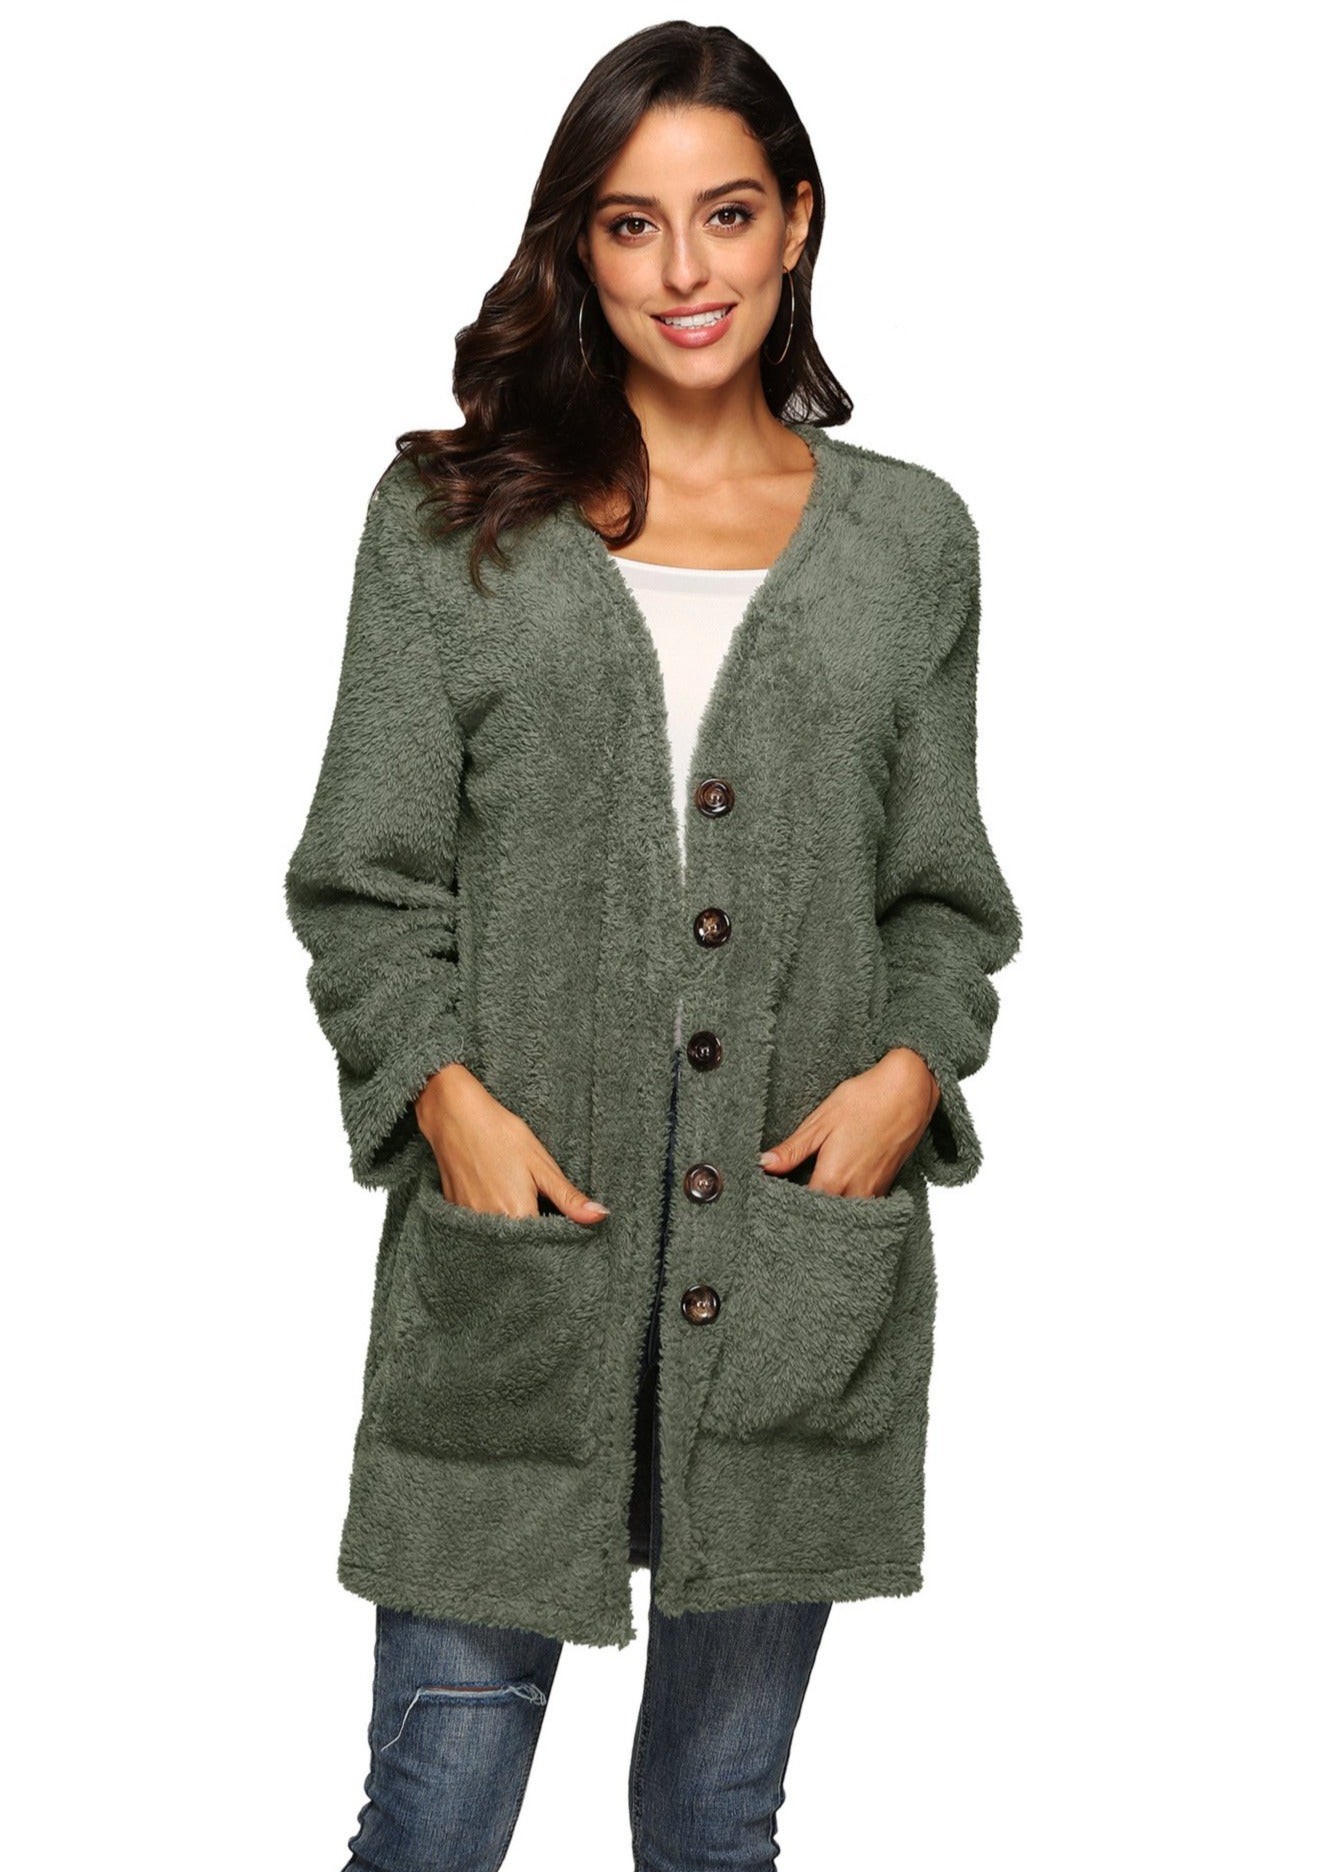 Woolen Coat Outerwear